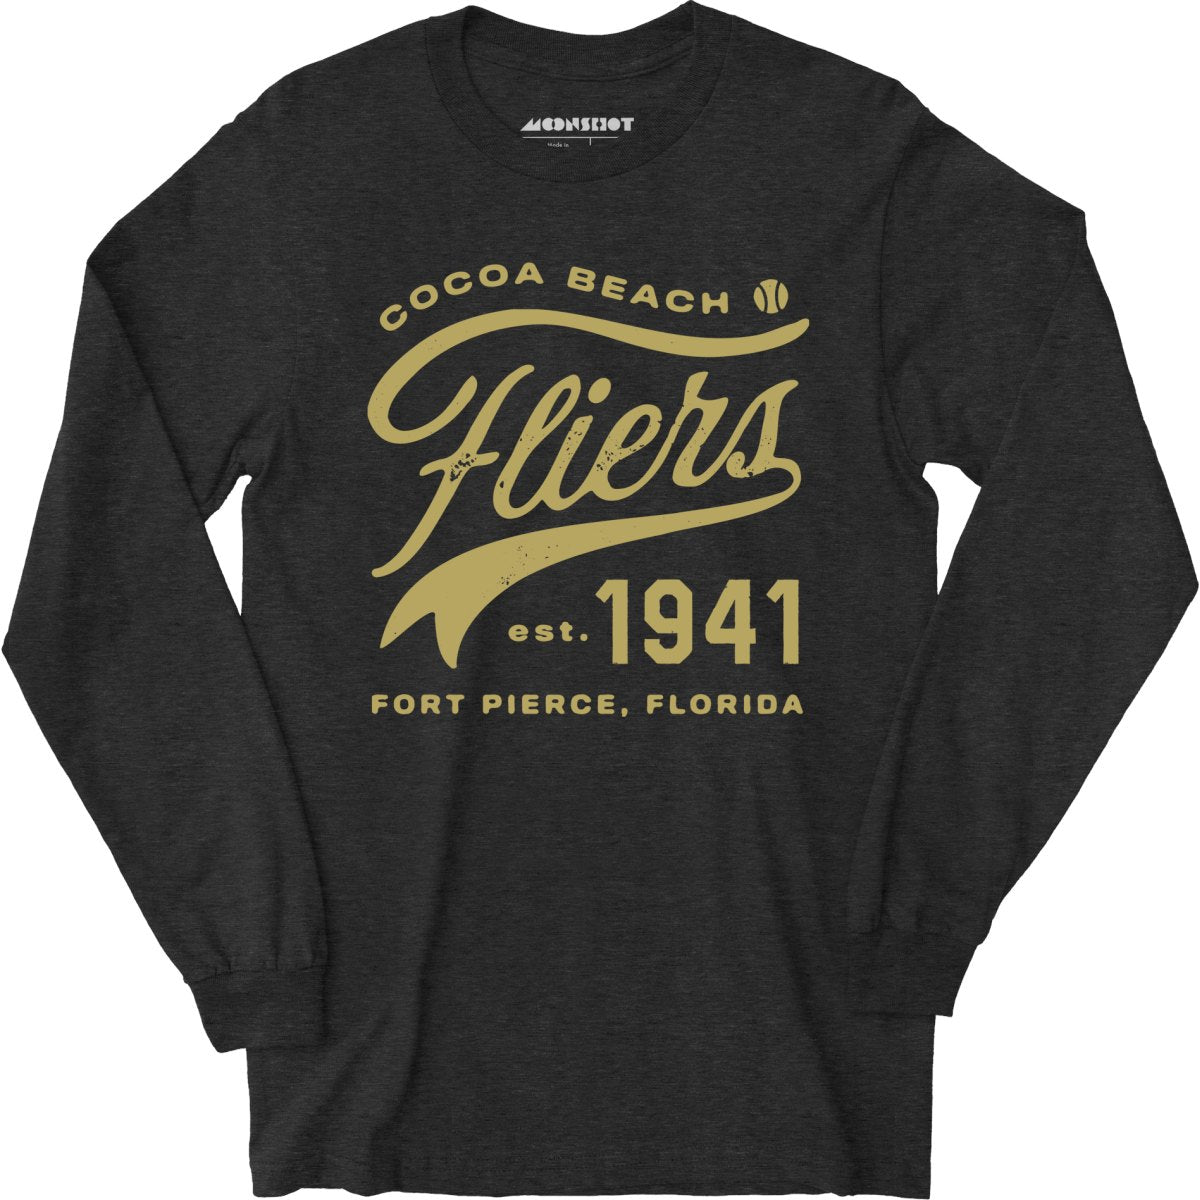 Cocoa Beach Fliers - Florida - Vintage Defunct Baseball Teams - Long Sleeve T-Shirt